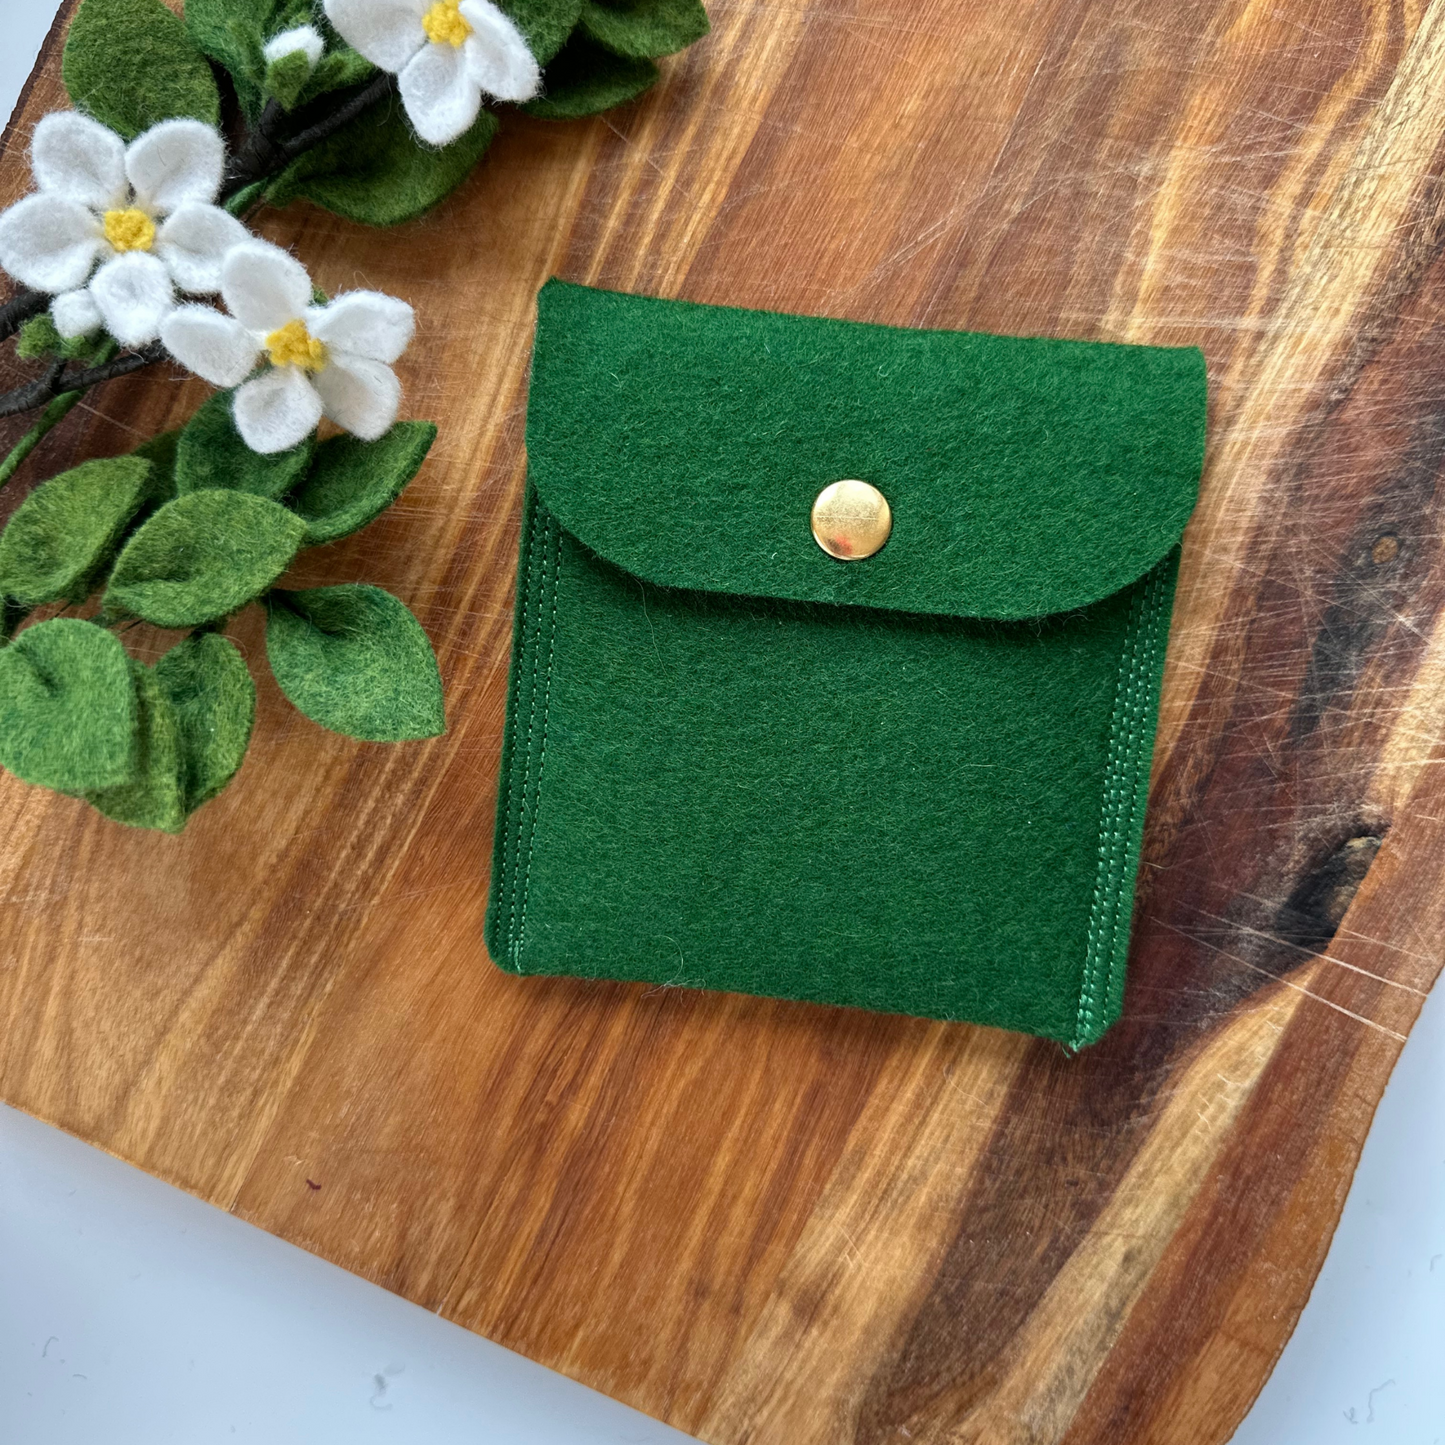 Green merino felt pouch with gold press stud